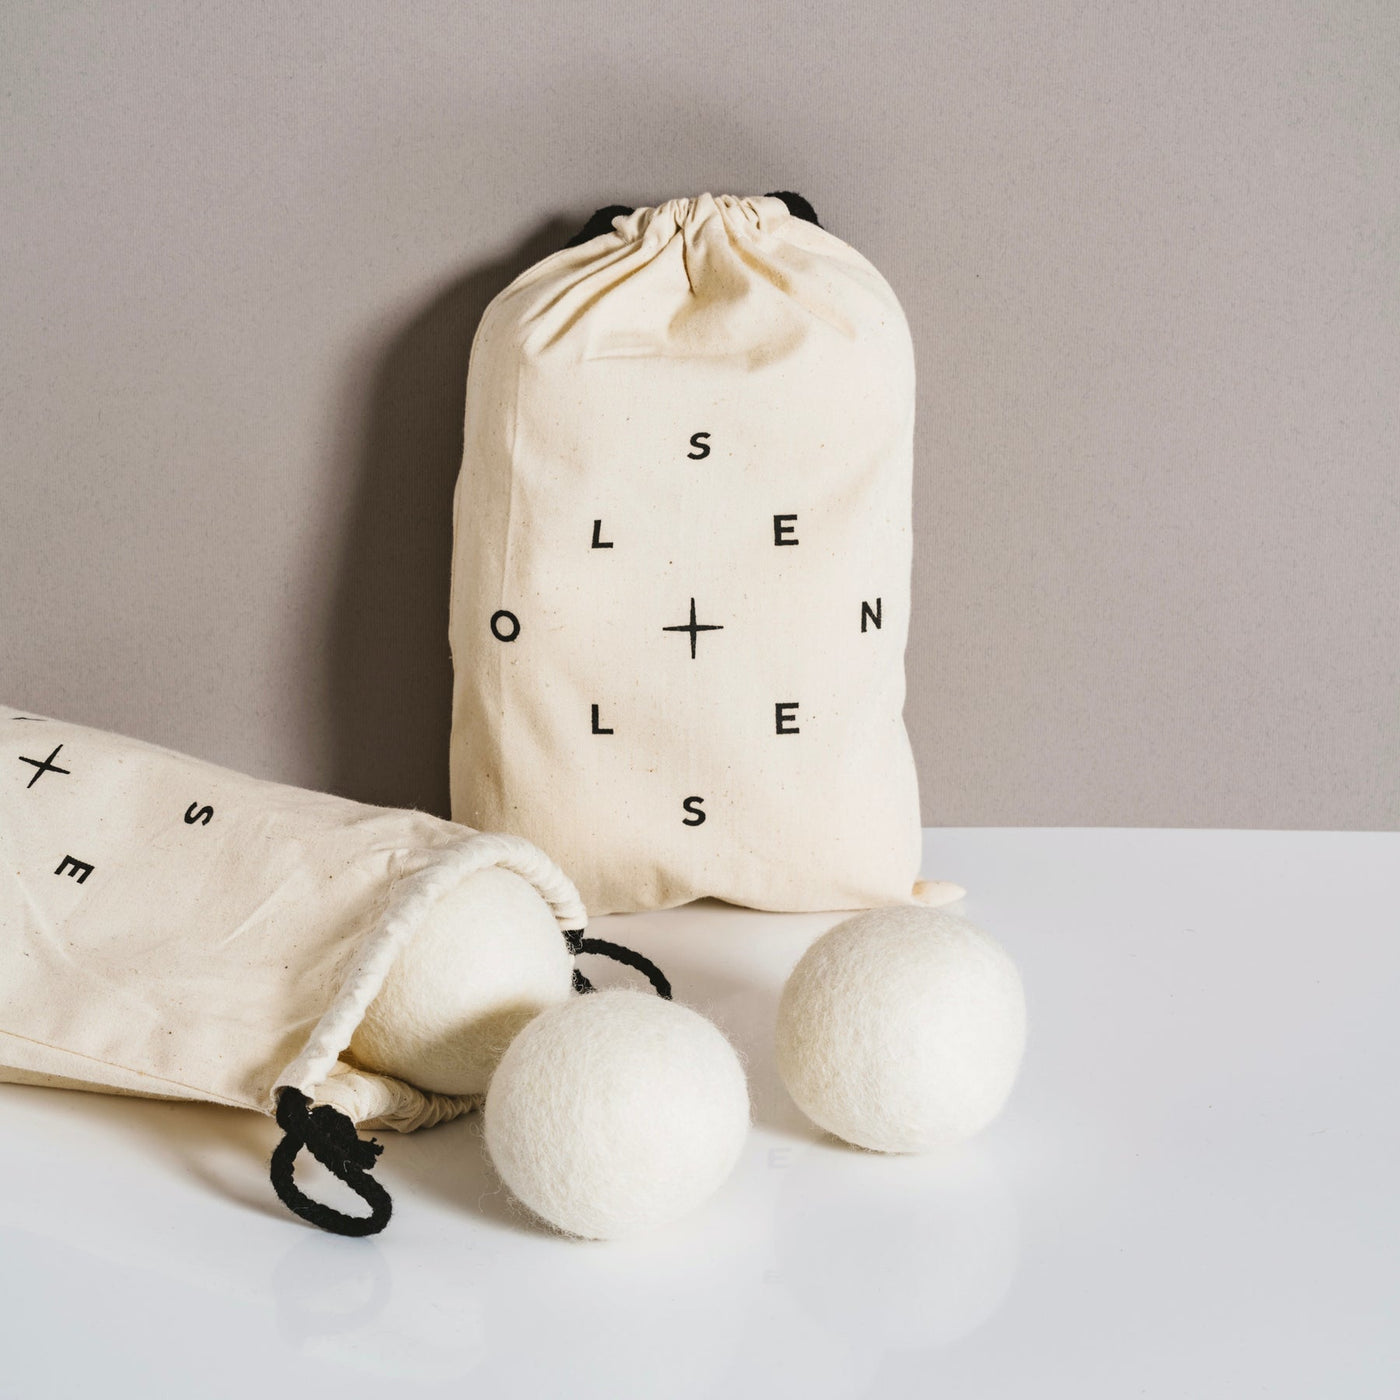 Gotstyle Fashion - Olsen+Olsen Gifts Dryer Balls - Bag of 6 - White